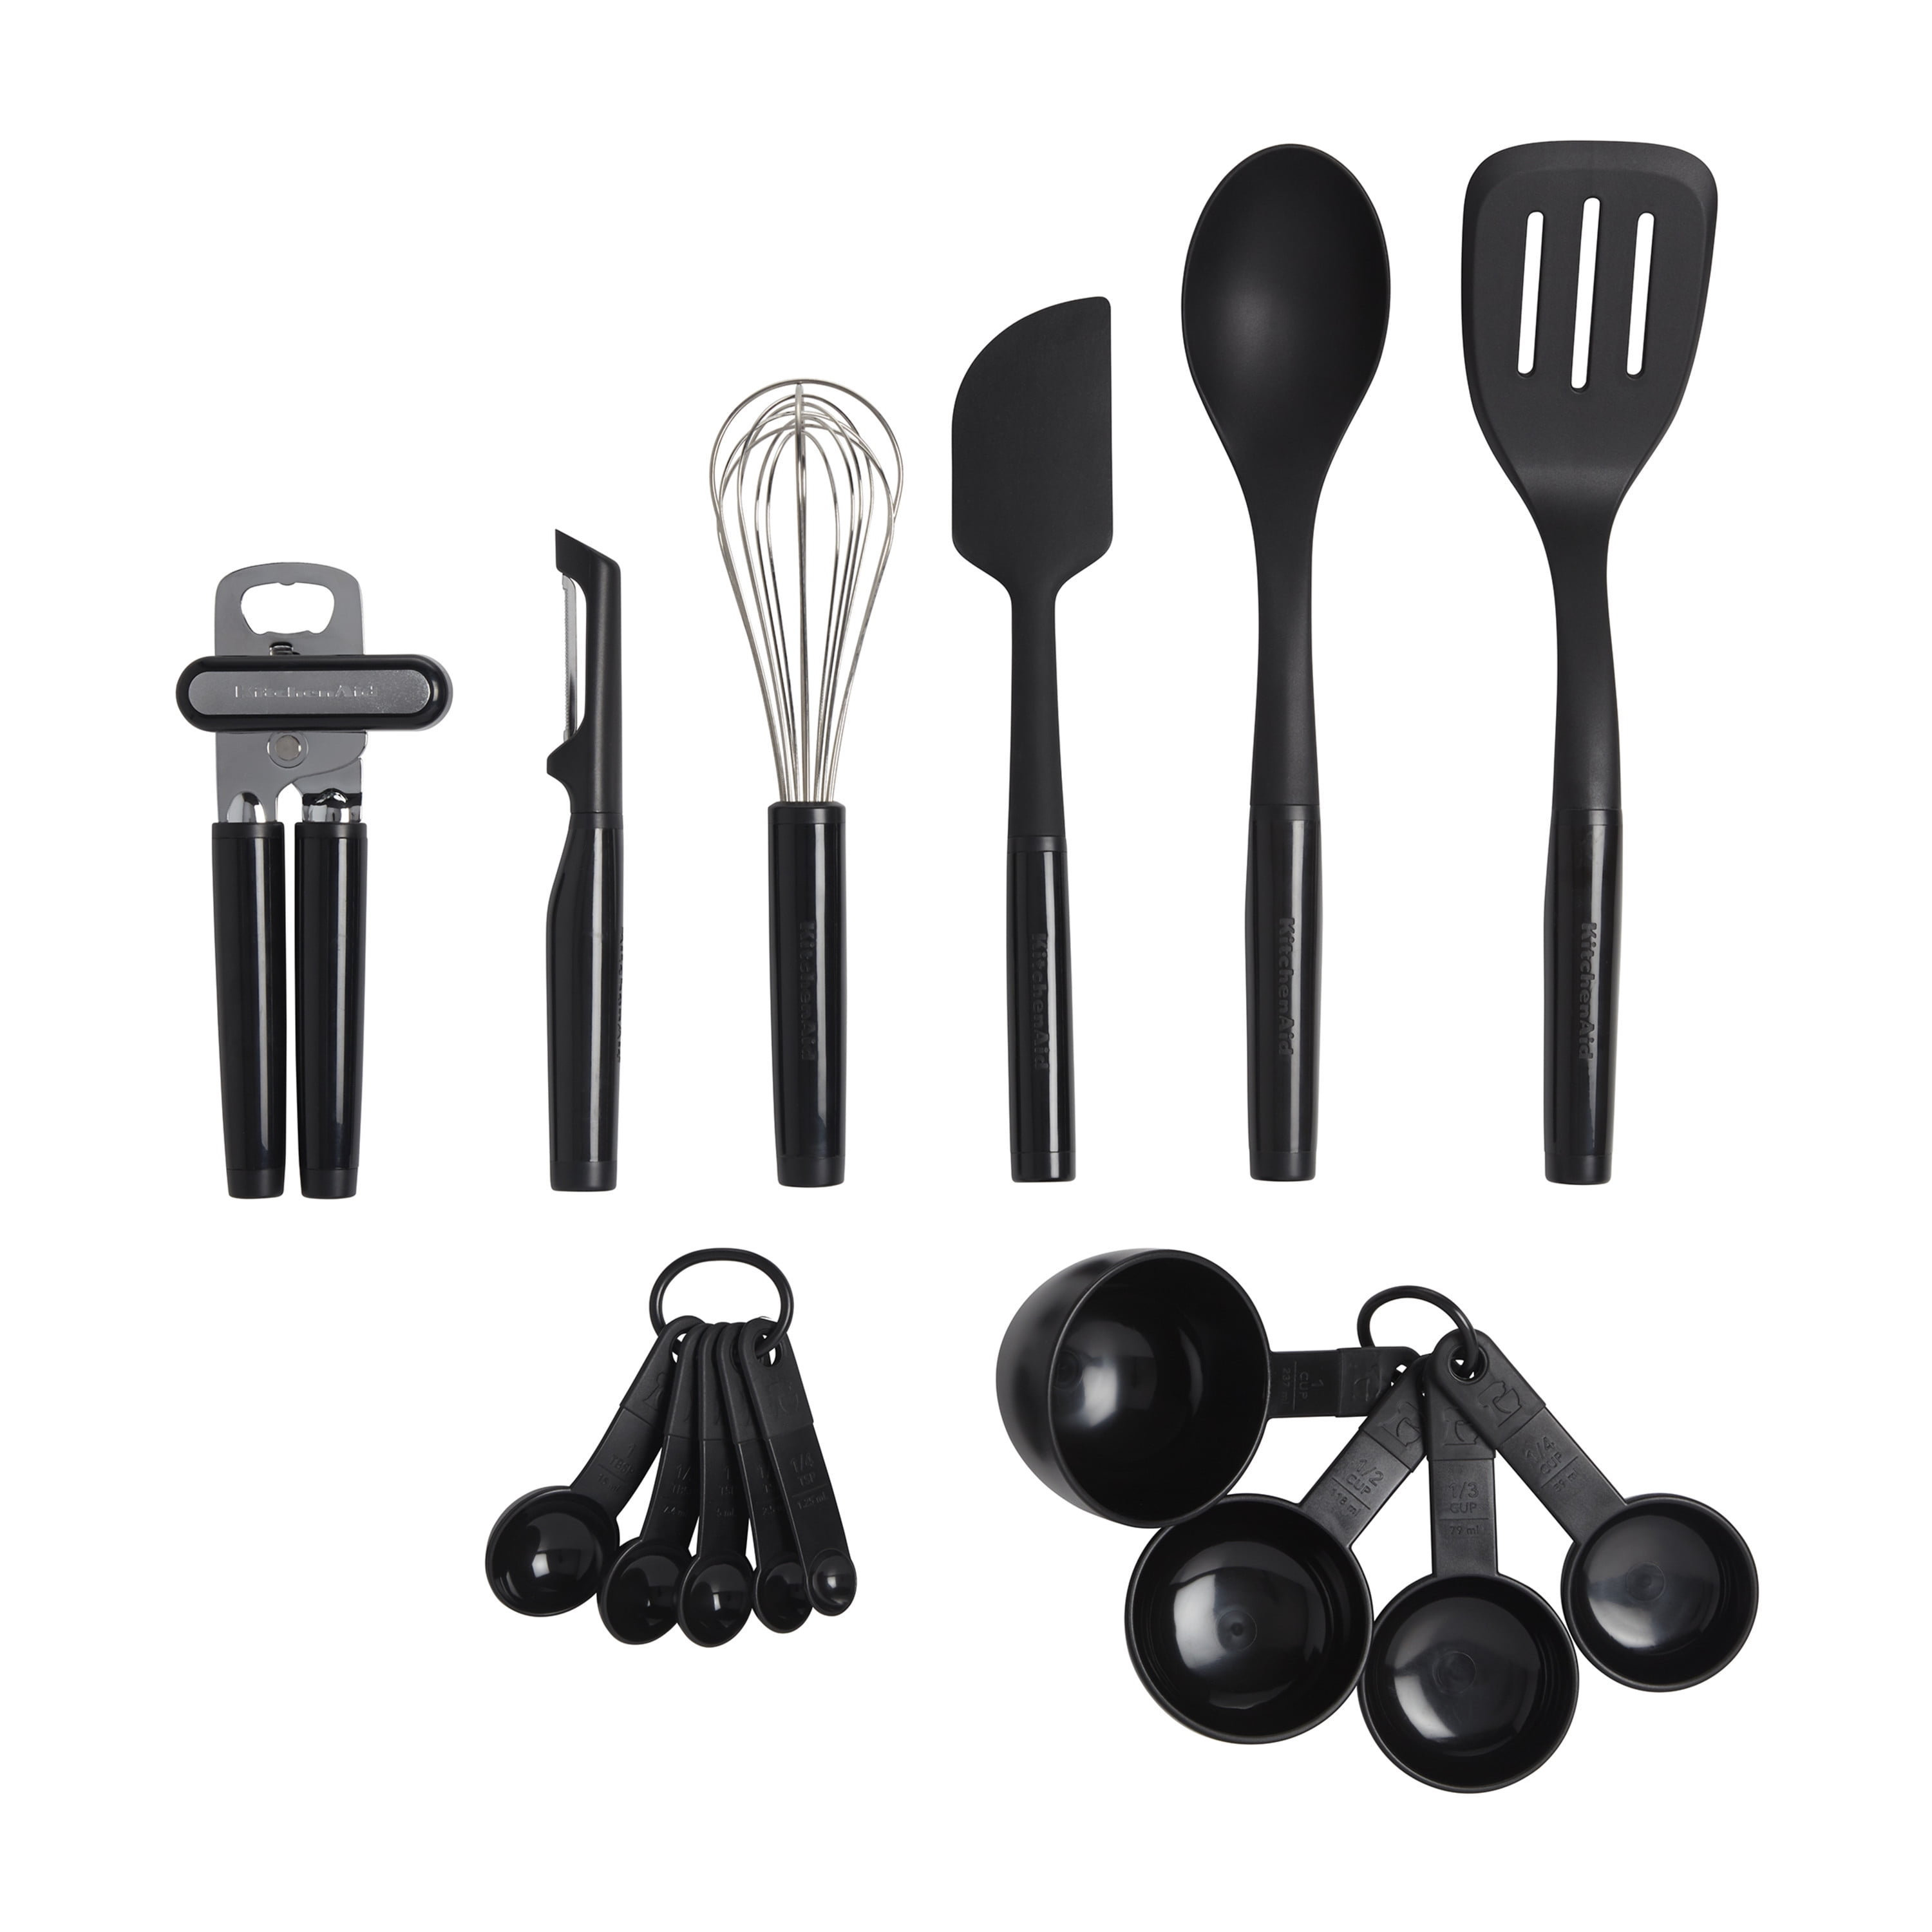 KitchenAid Tools and Gadgets, Set of 15